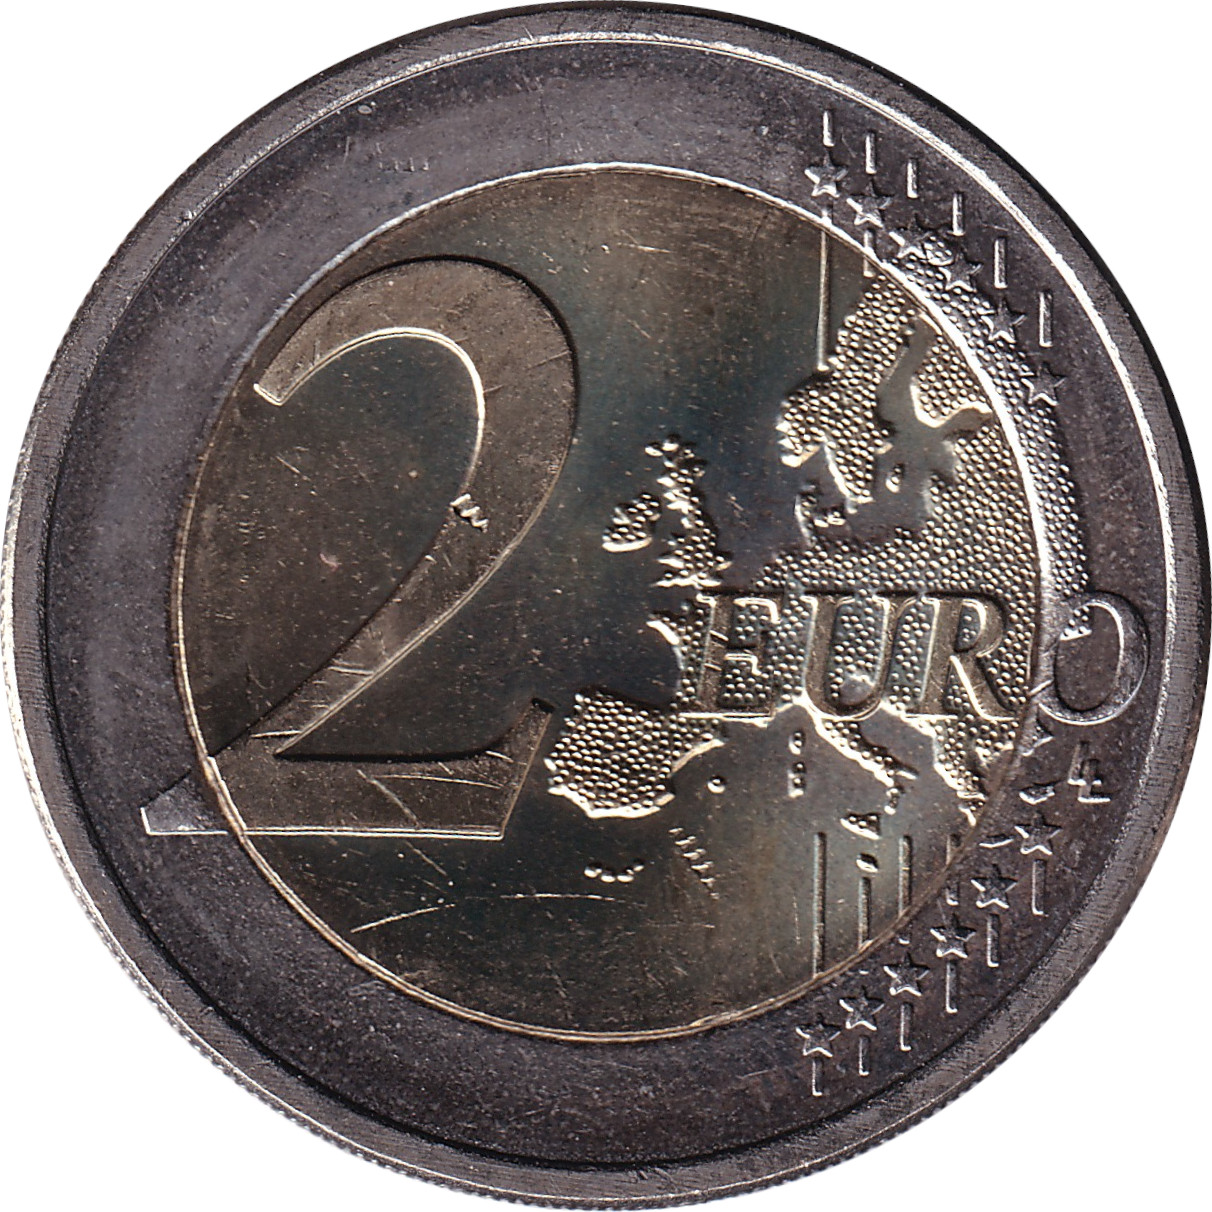 2 euro - Abdication of Beatrix